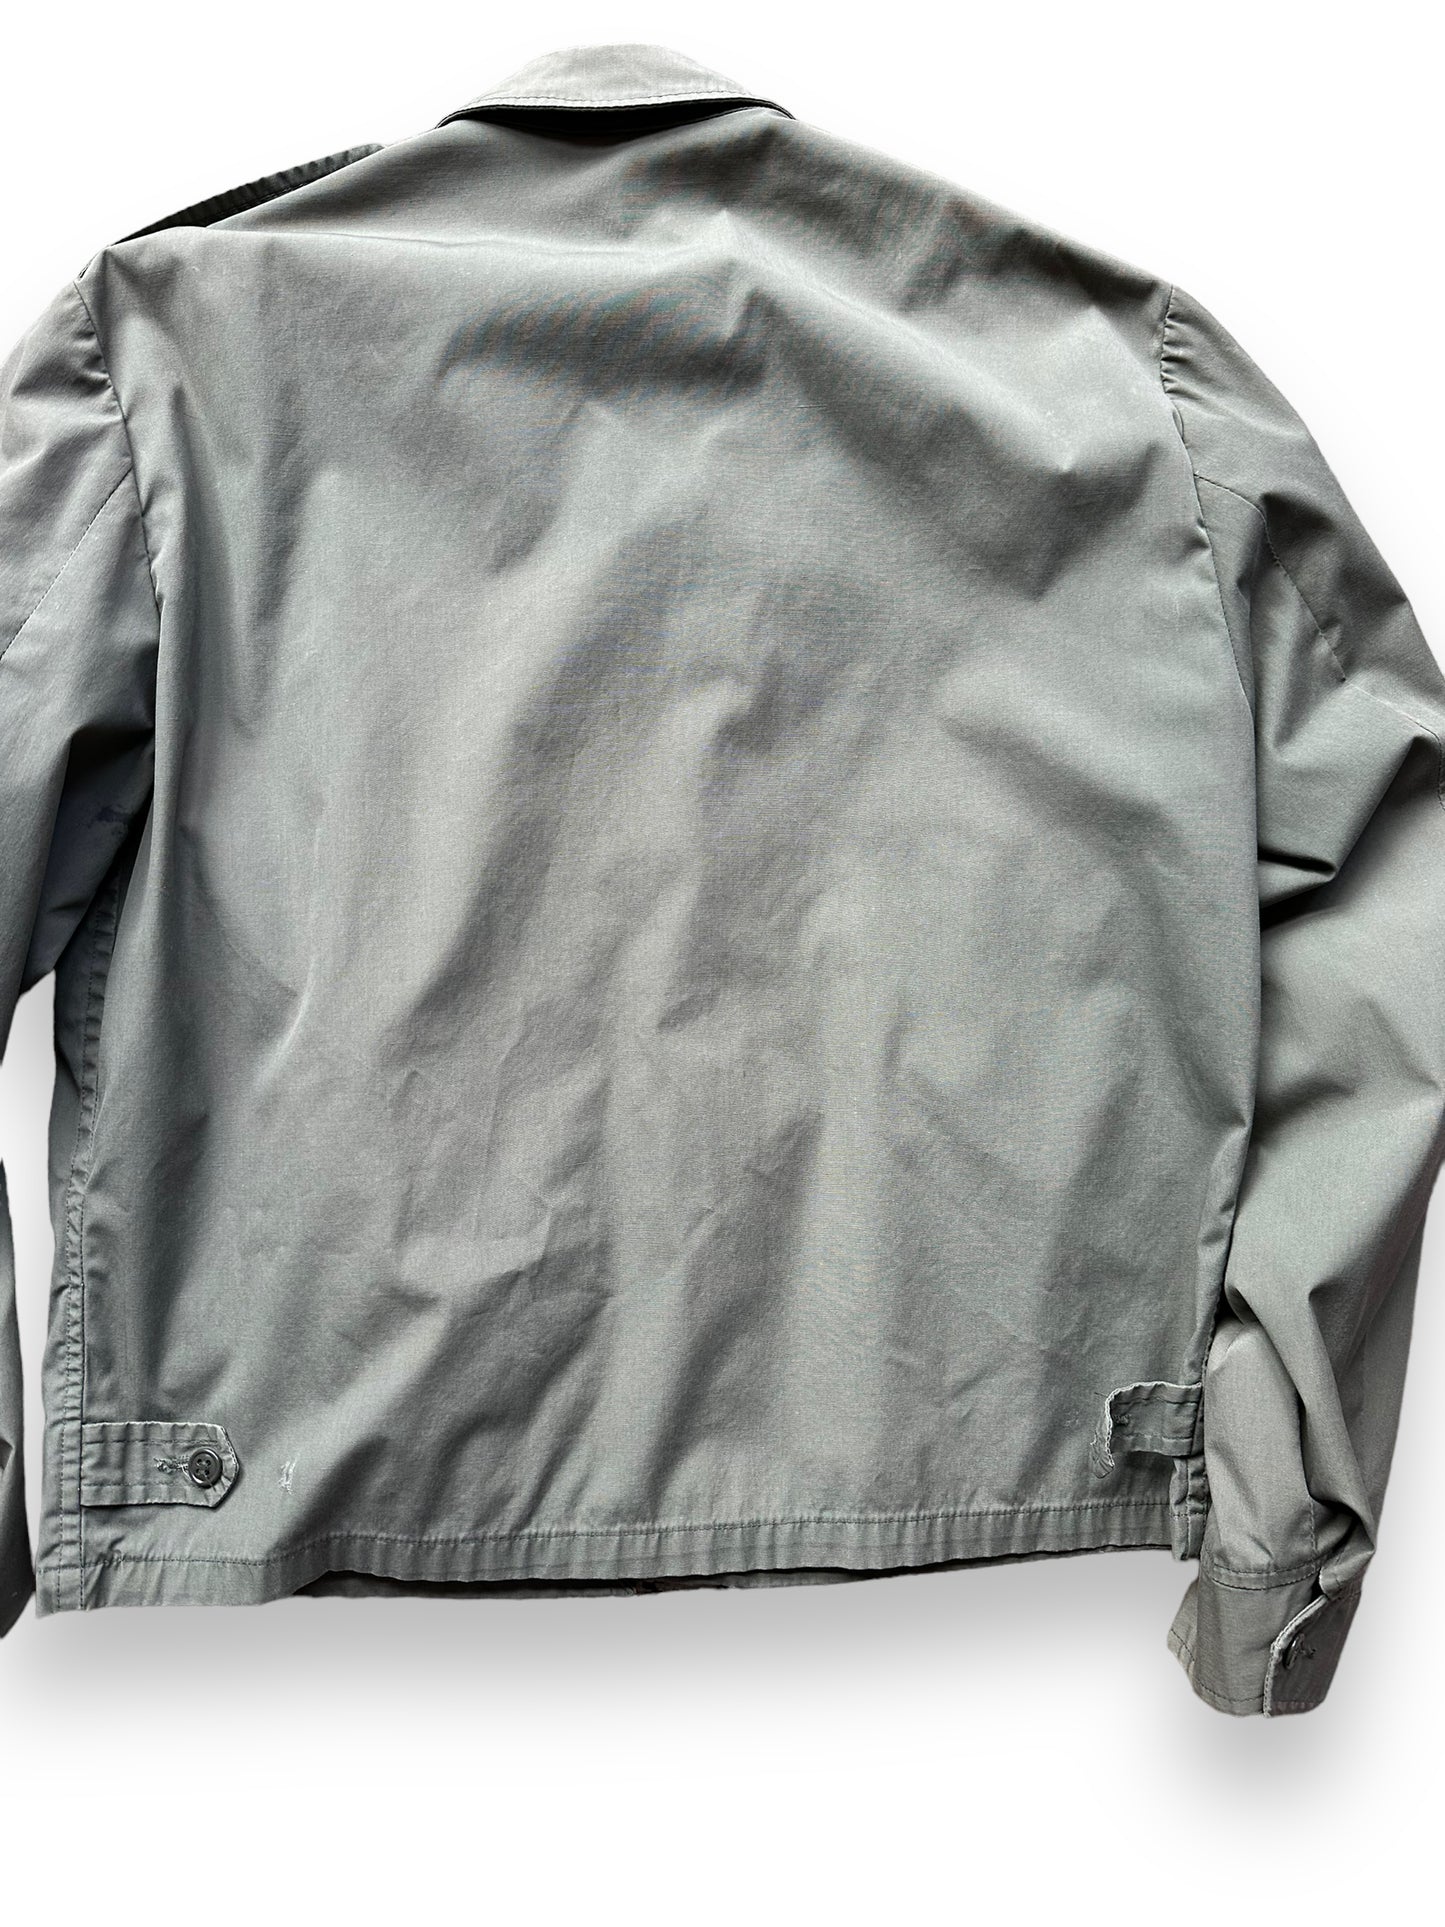 Rear Detail on Vintage Lightweight US Army Jacket SZ M-L | Vintage Military Jackets Seattle | Barn Owl Vintage Clothing Seattle